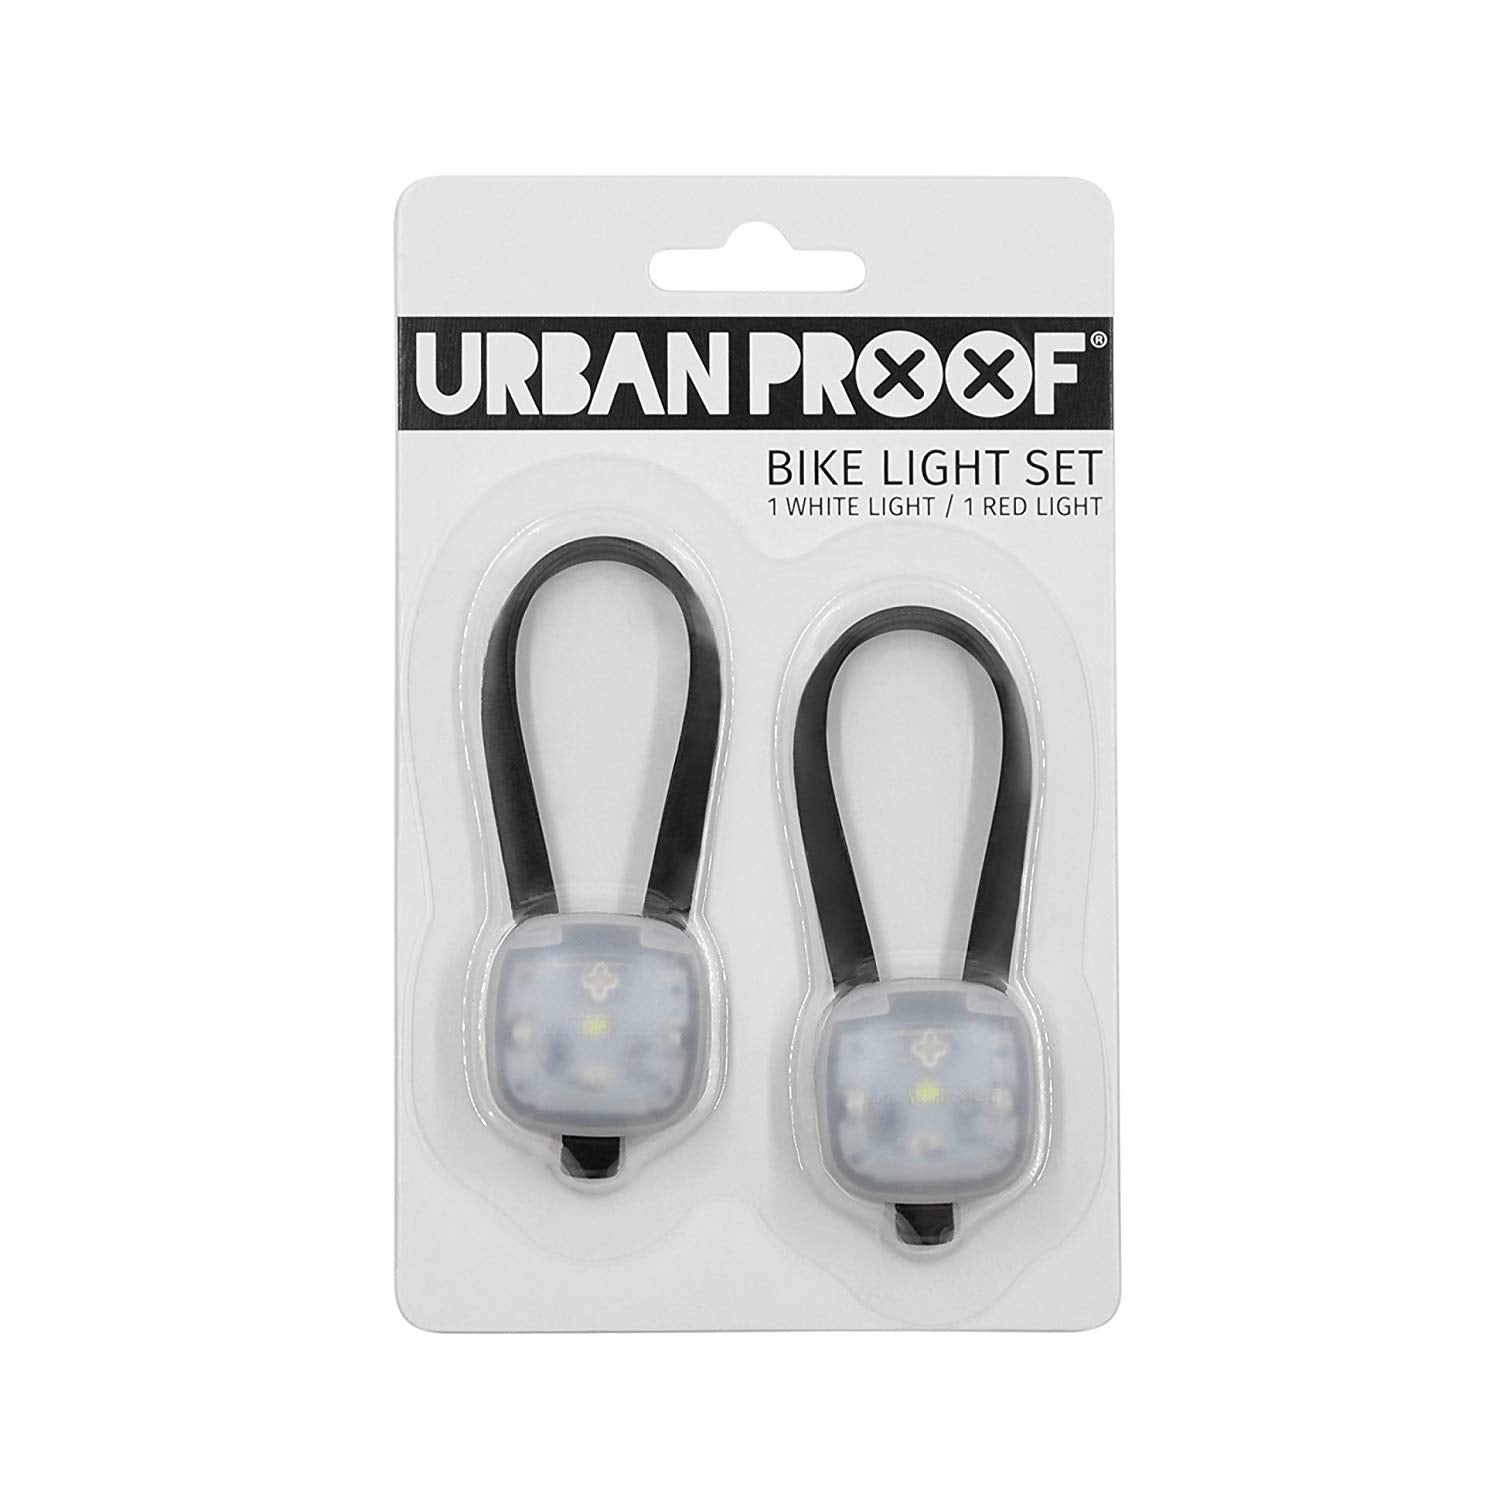 Urban Proof Bike Light SET